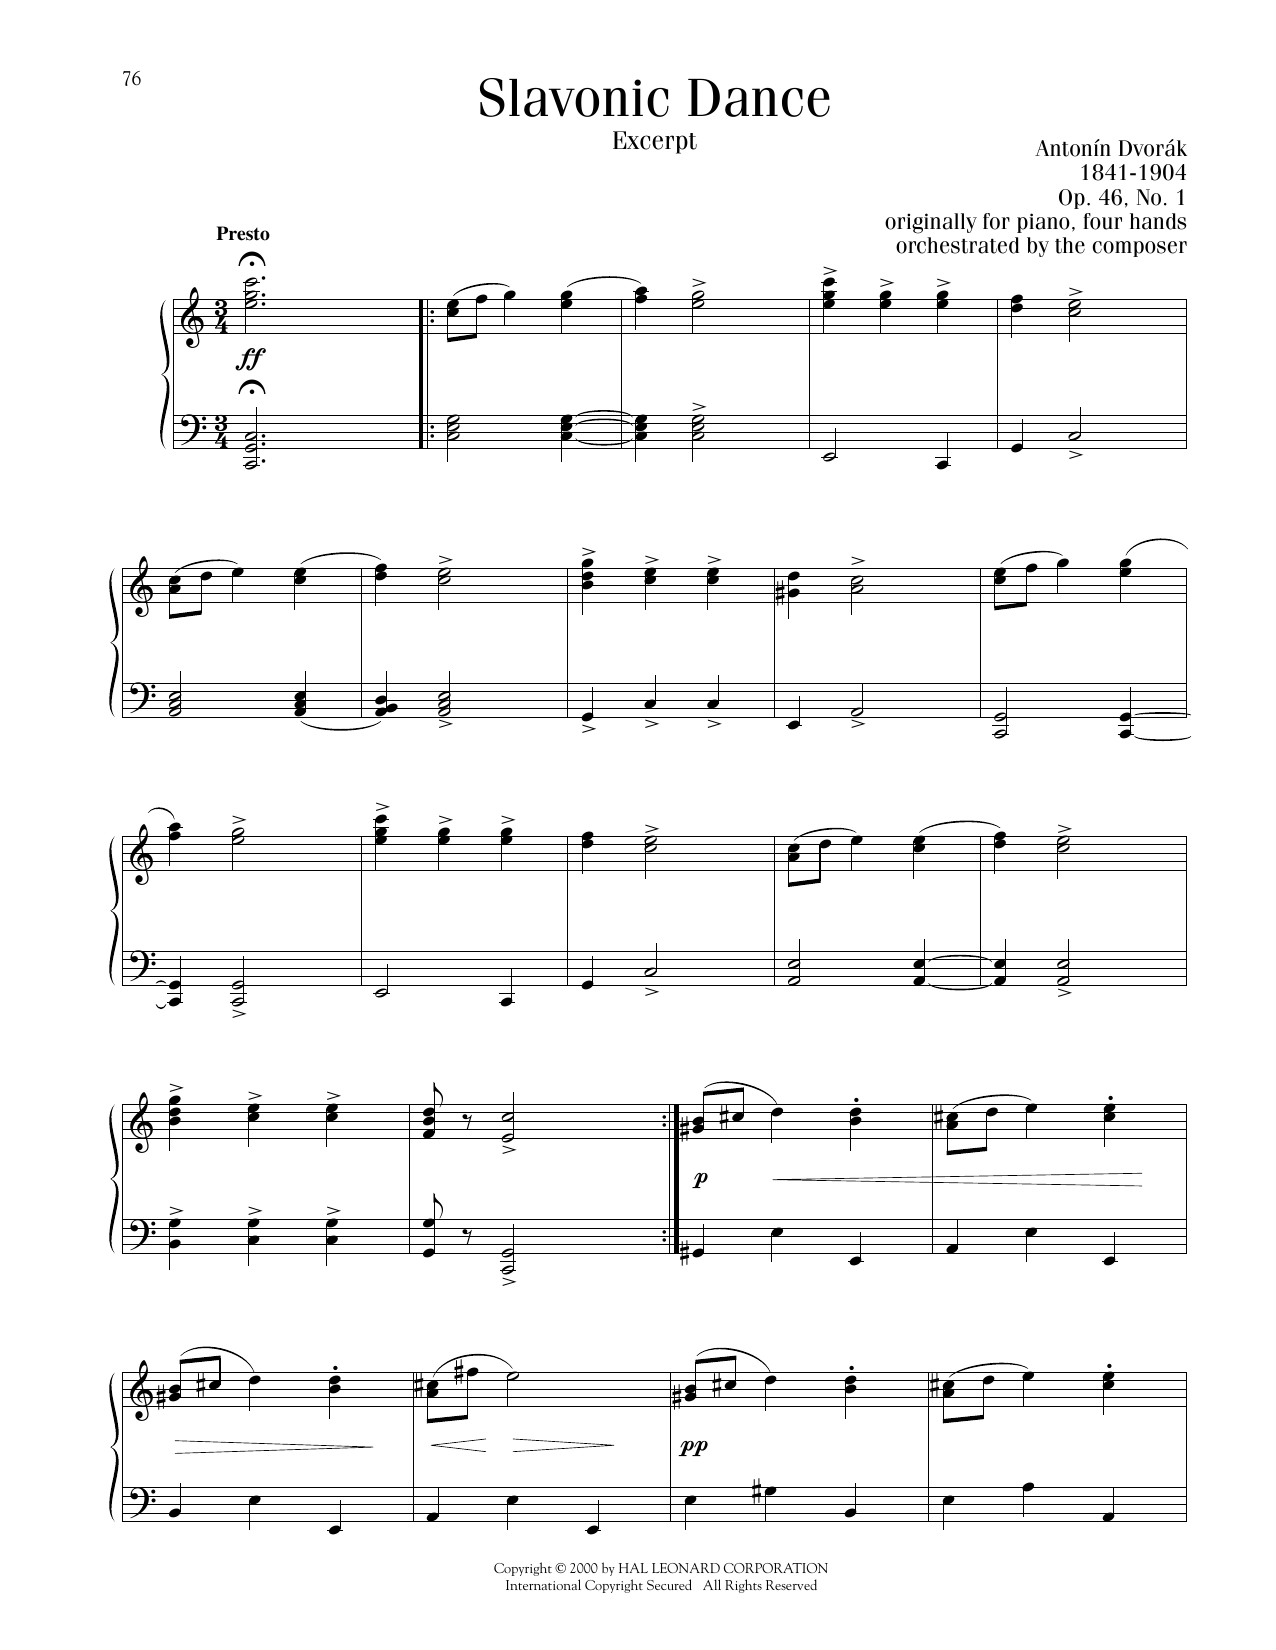 Antonin Dvorak Slavonic Dance #1 Sheet Music Notes & Chords for Piano Solo - Download or Print PDF